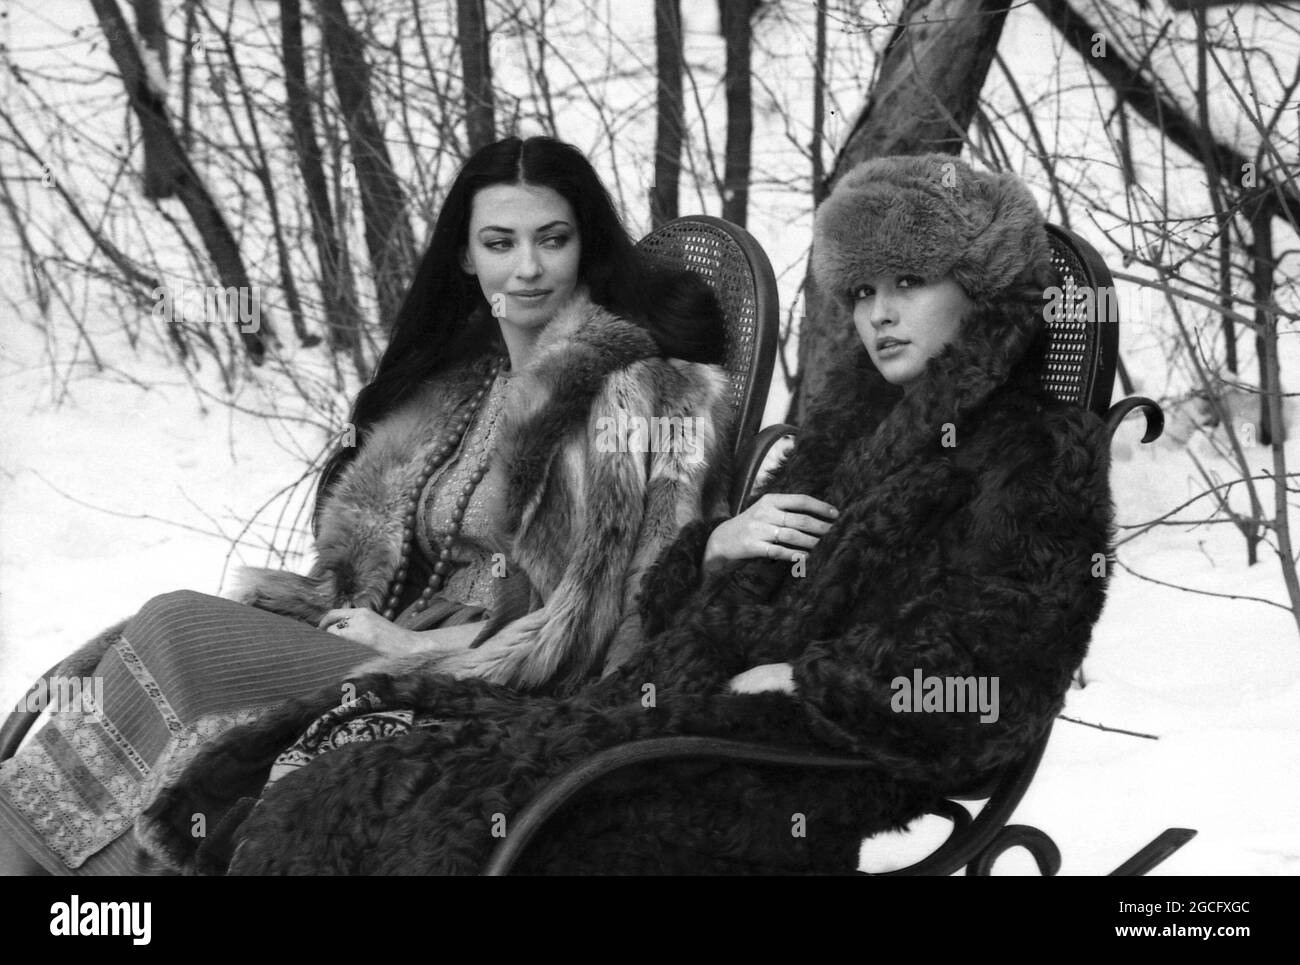 Le attrici rumene (e sorelle) Julieta Szönyi & anca Szönyi, 1980 Foto Stock